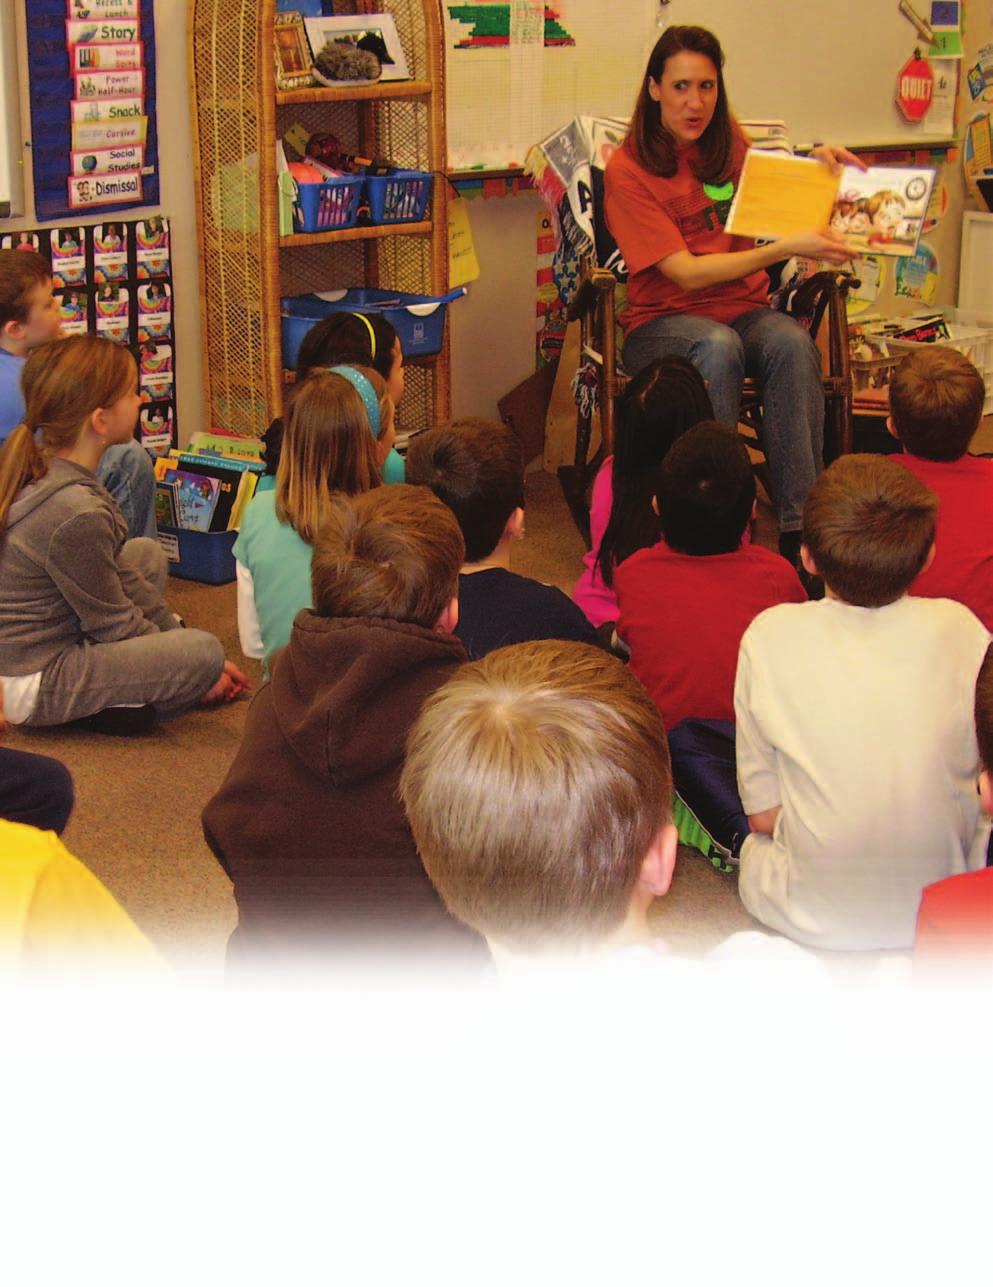 improve literacy in Minnesota schools.